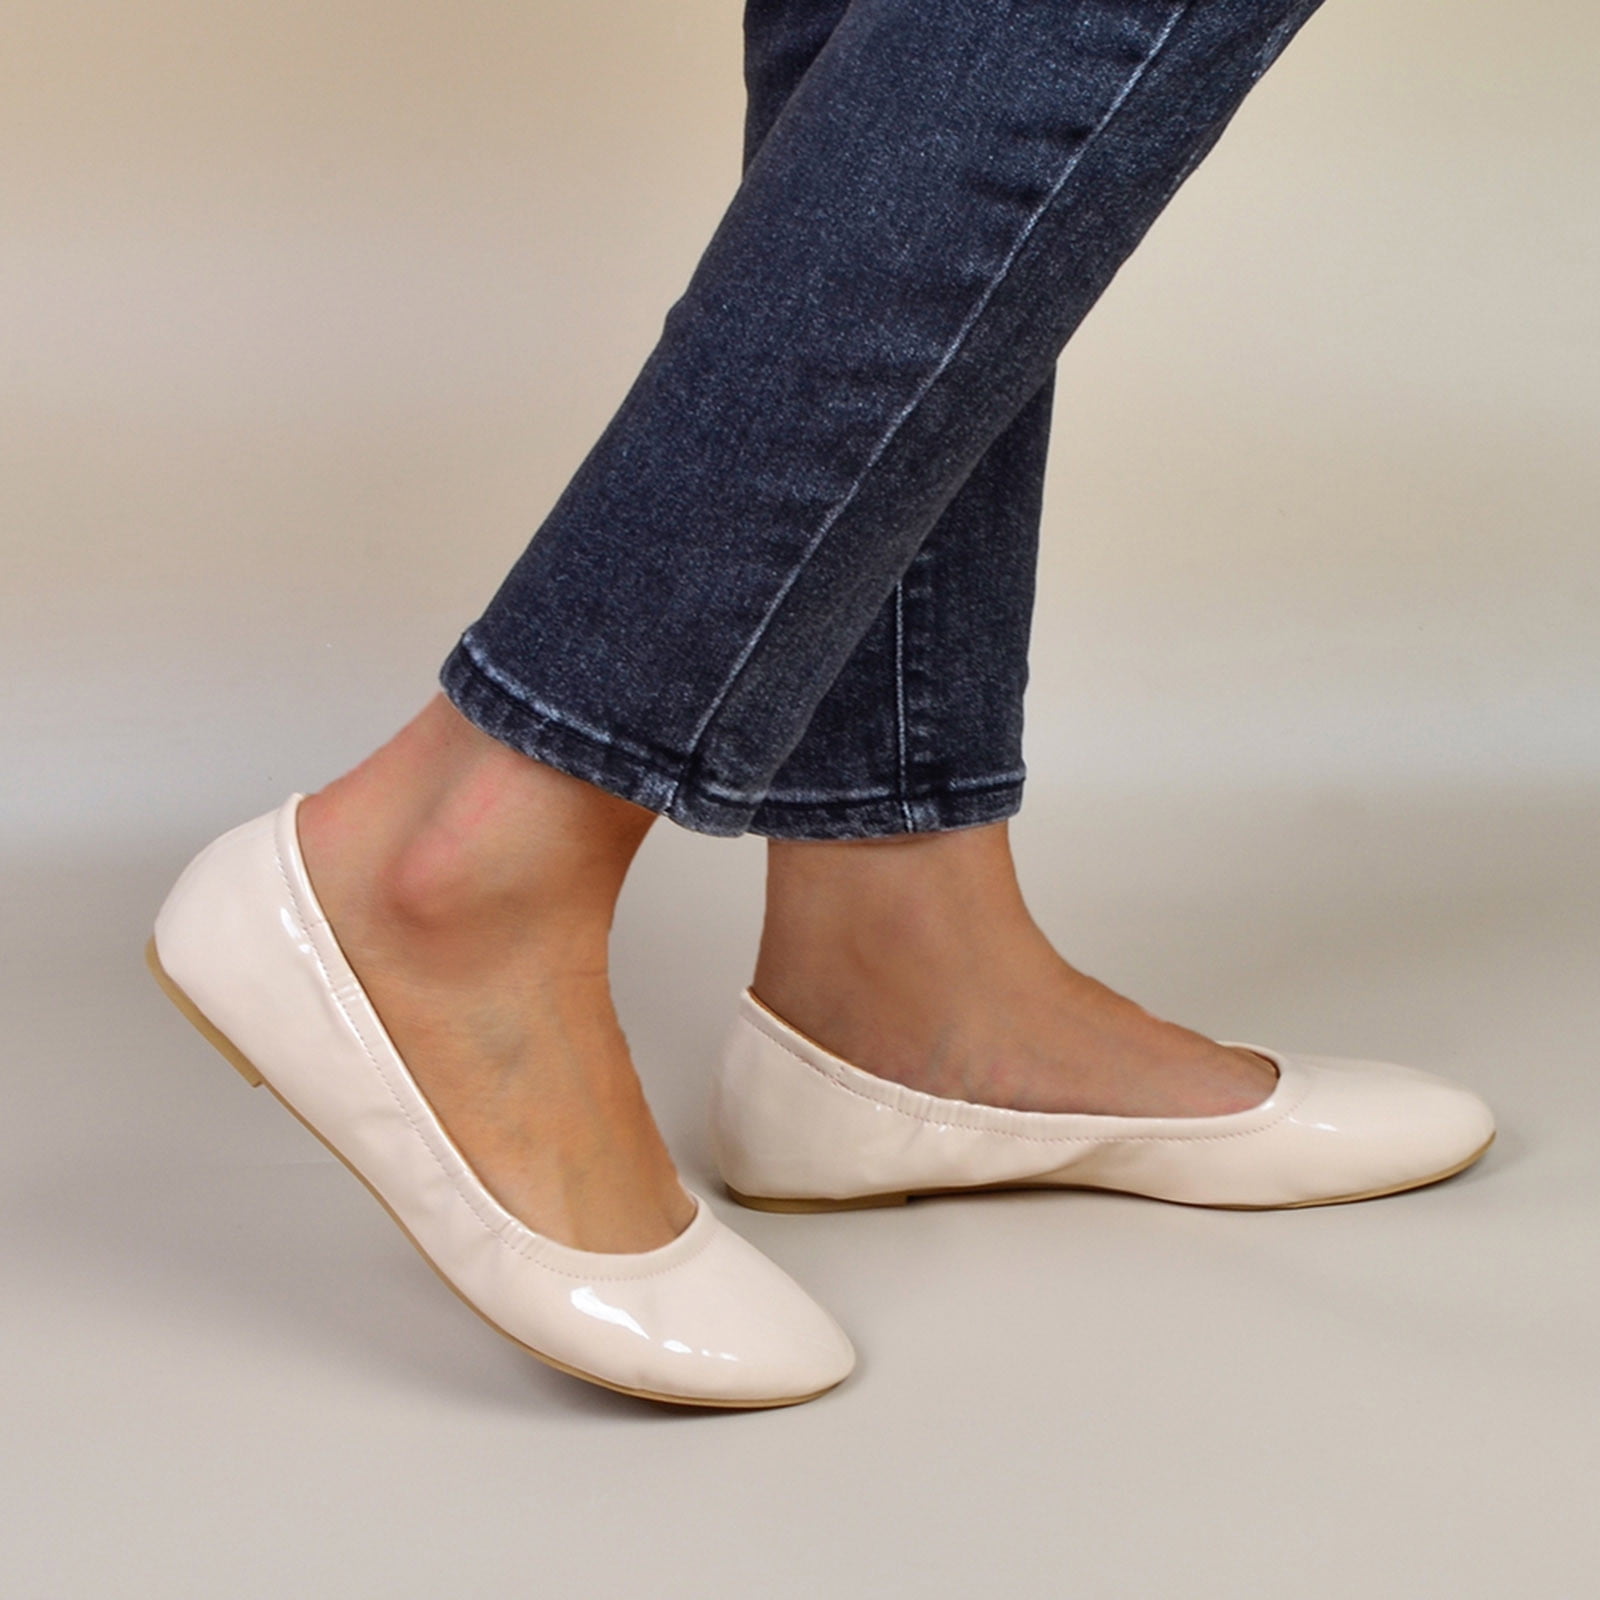 White Satin Pointy Toe Pump Low Heel | Low heels, Pointy toe pumps, Low  heel pumps